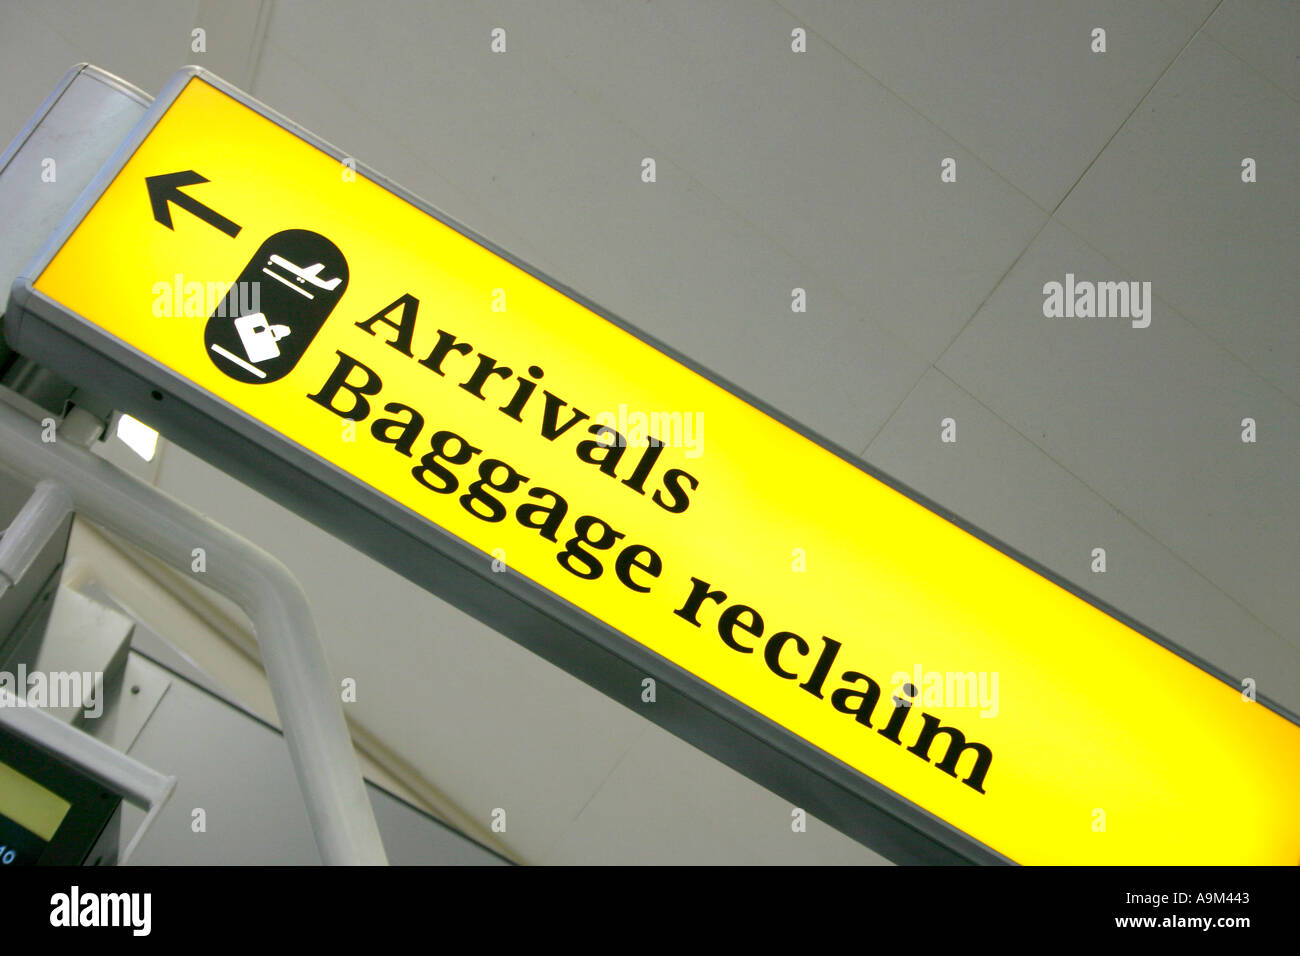 Arrivals Baggage Reclaim Sign at UK Airport Stock Photo